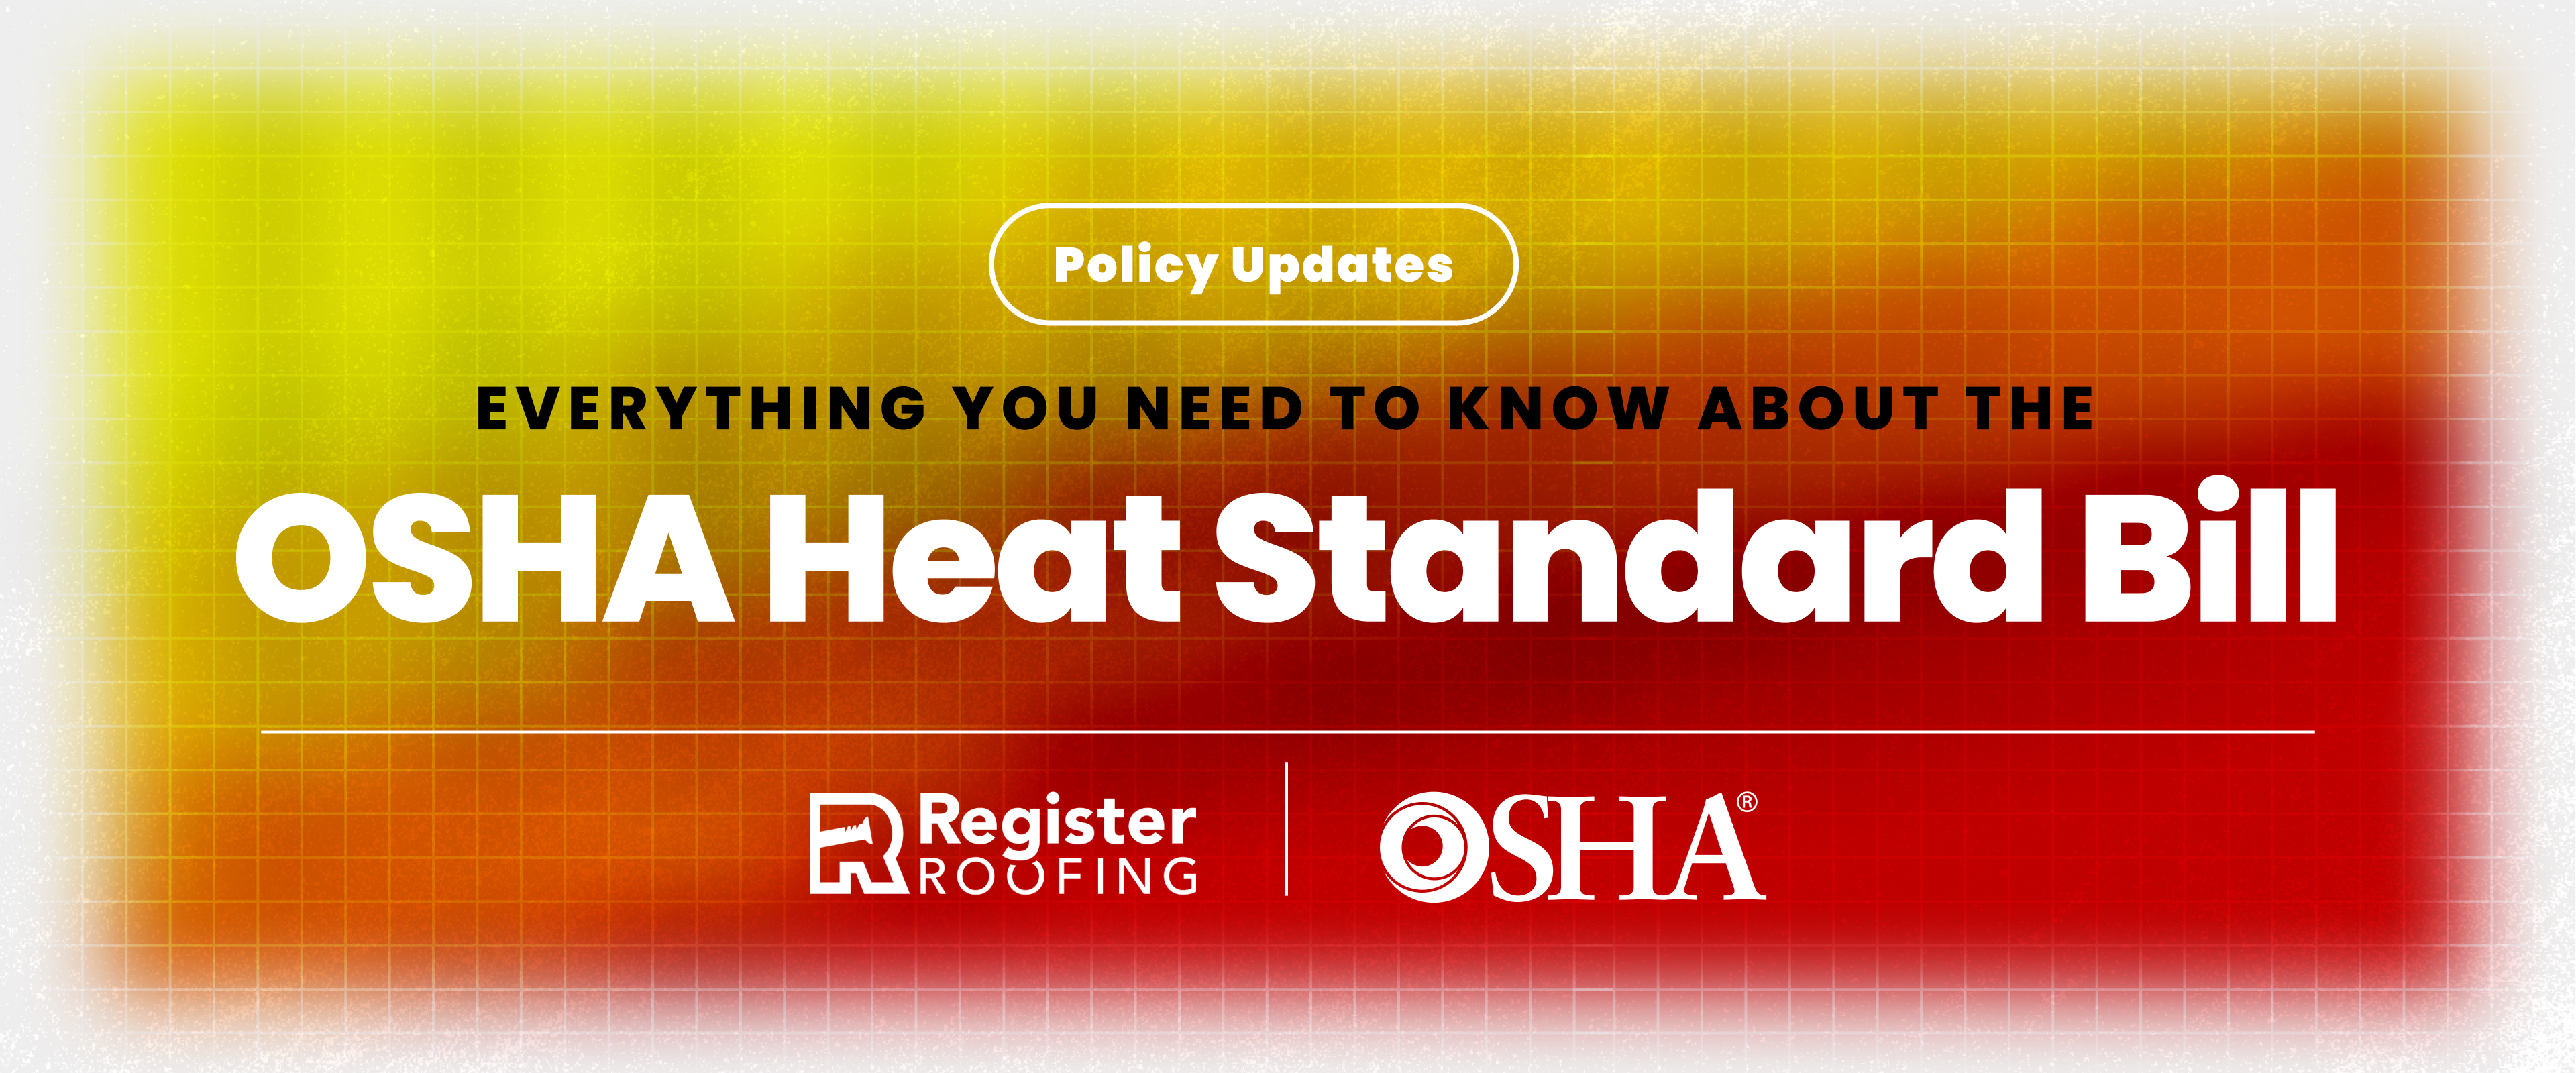 A Counter Argument to the OSHA Heat Standard Bill